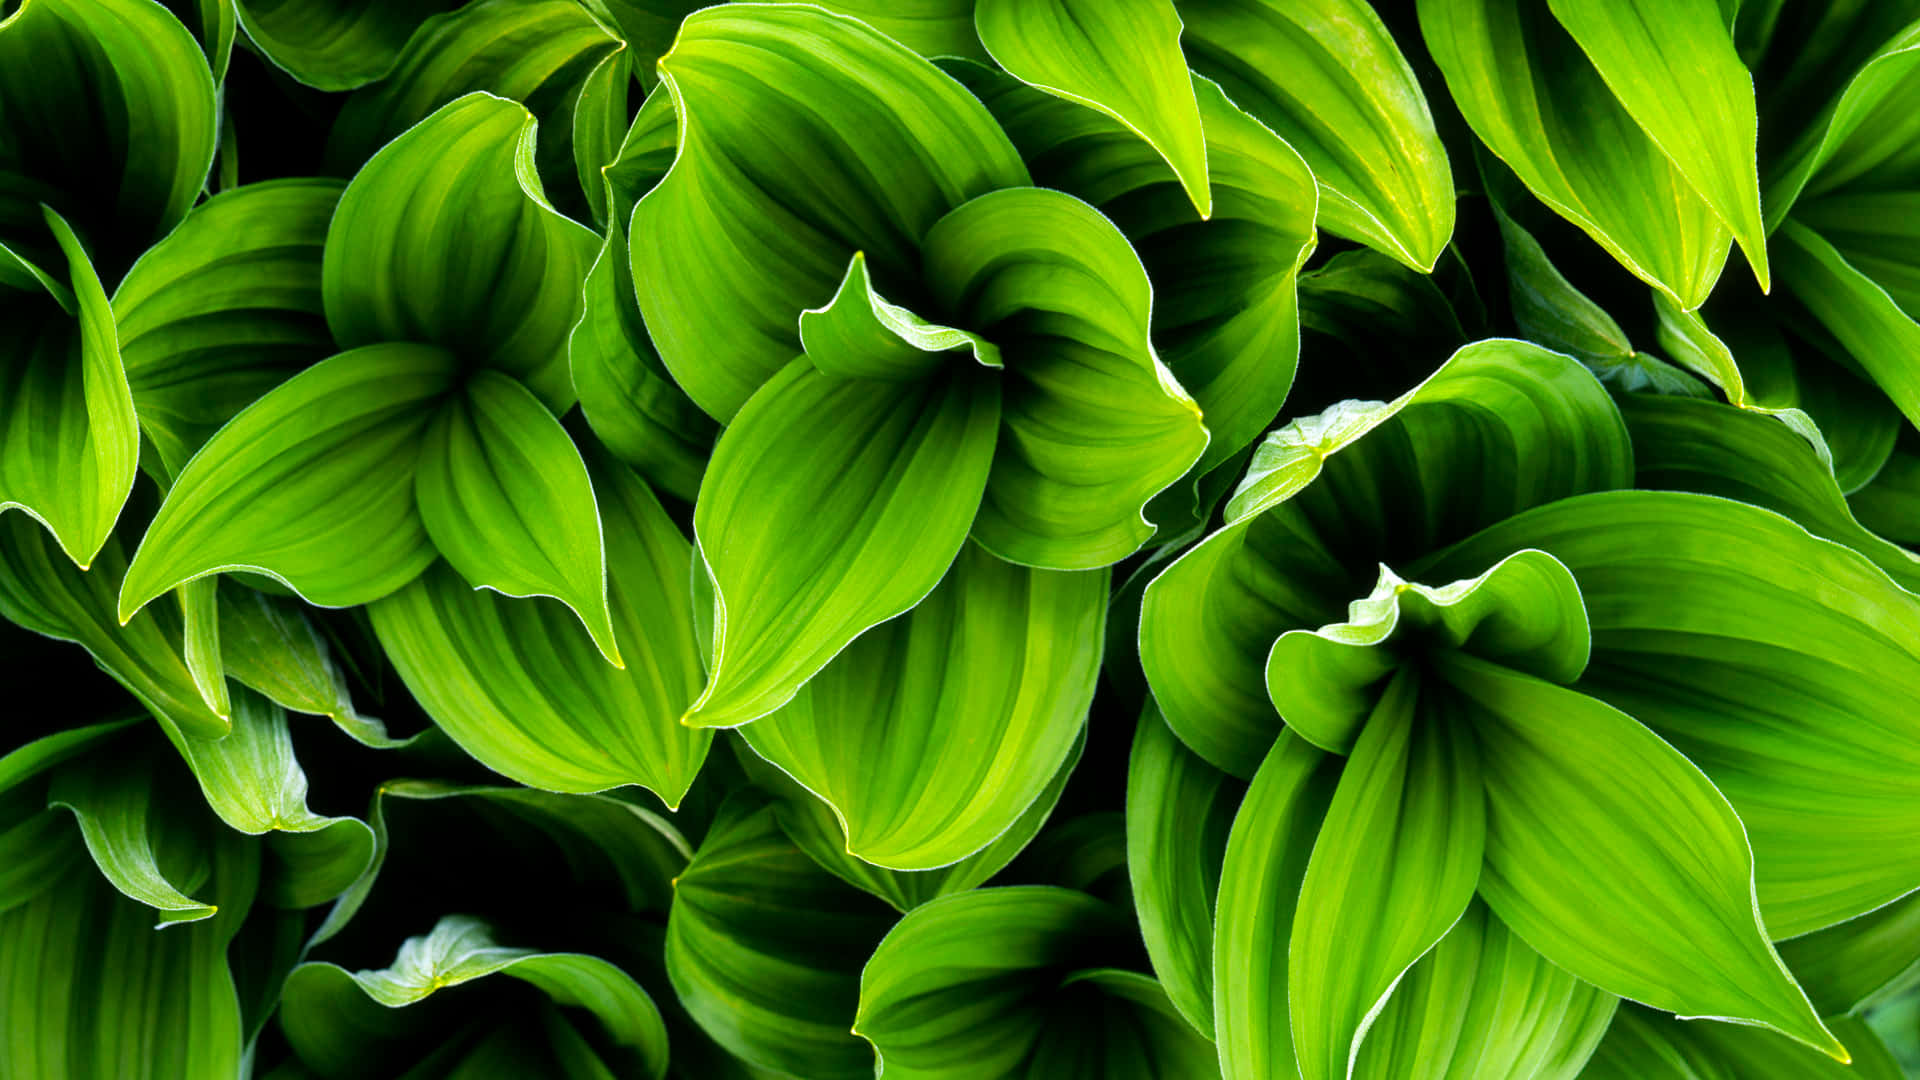 Vibrant Green Plant in Natural Environment Wallpaper